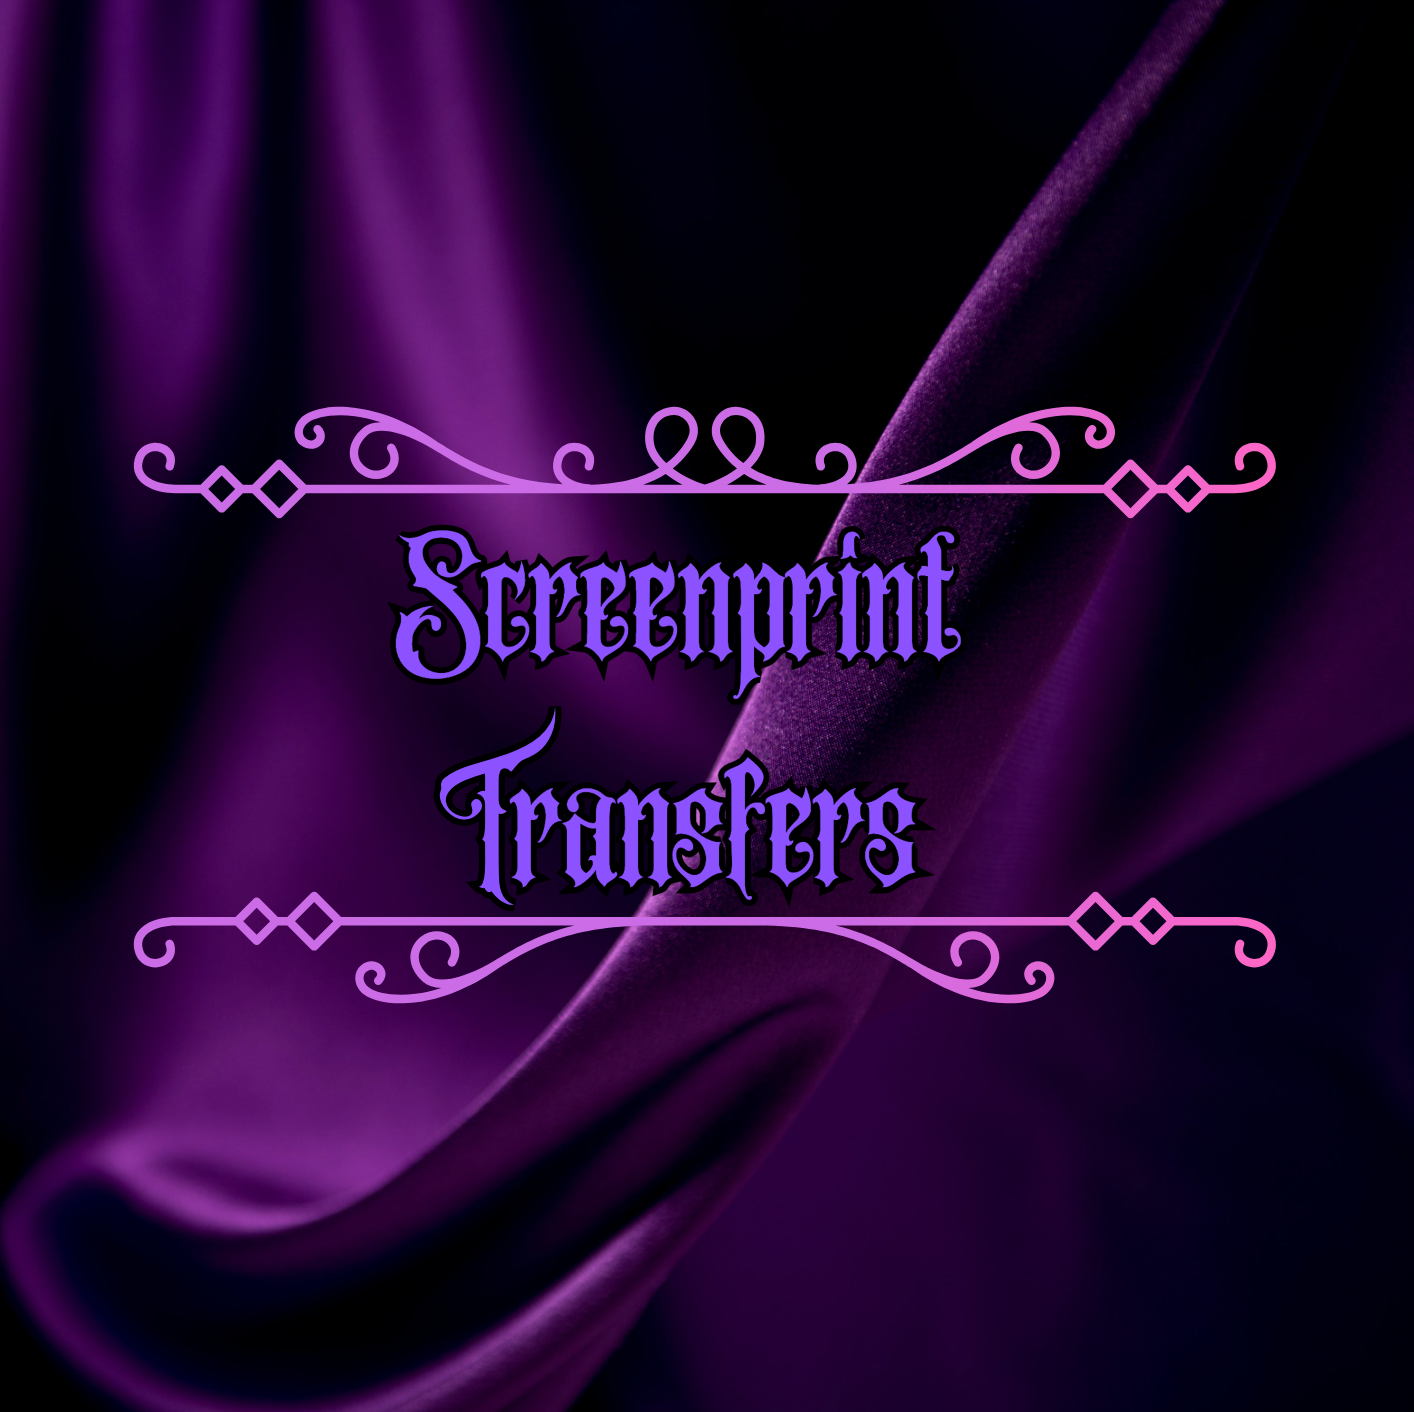 Screen Print Transfers